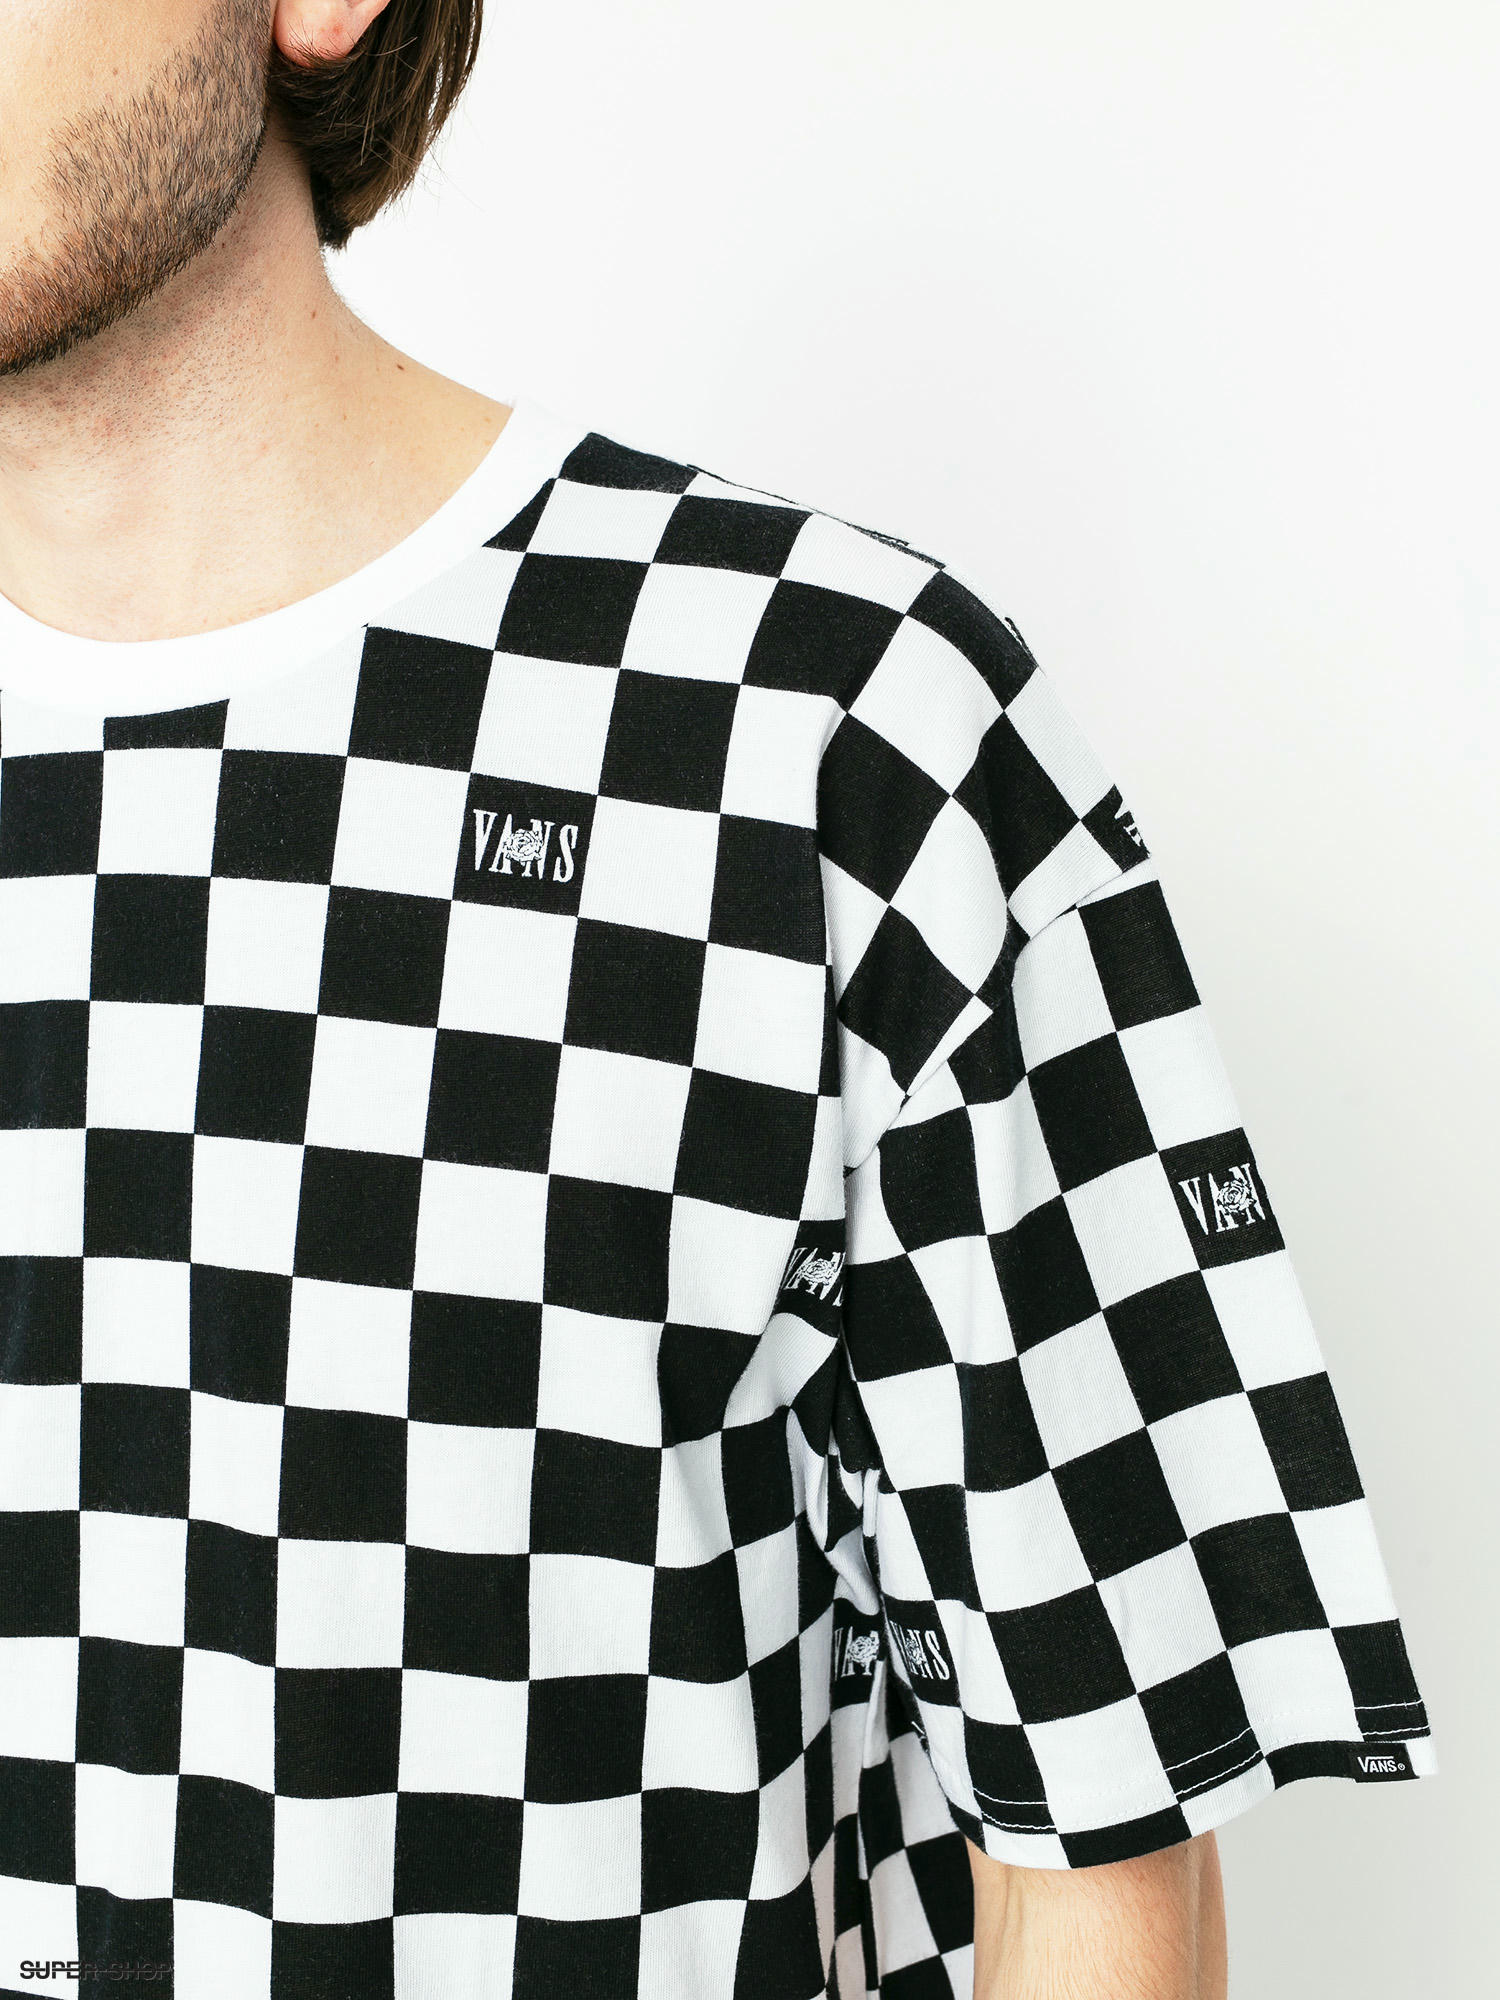 vans checkerboard clothing